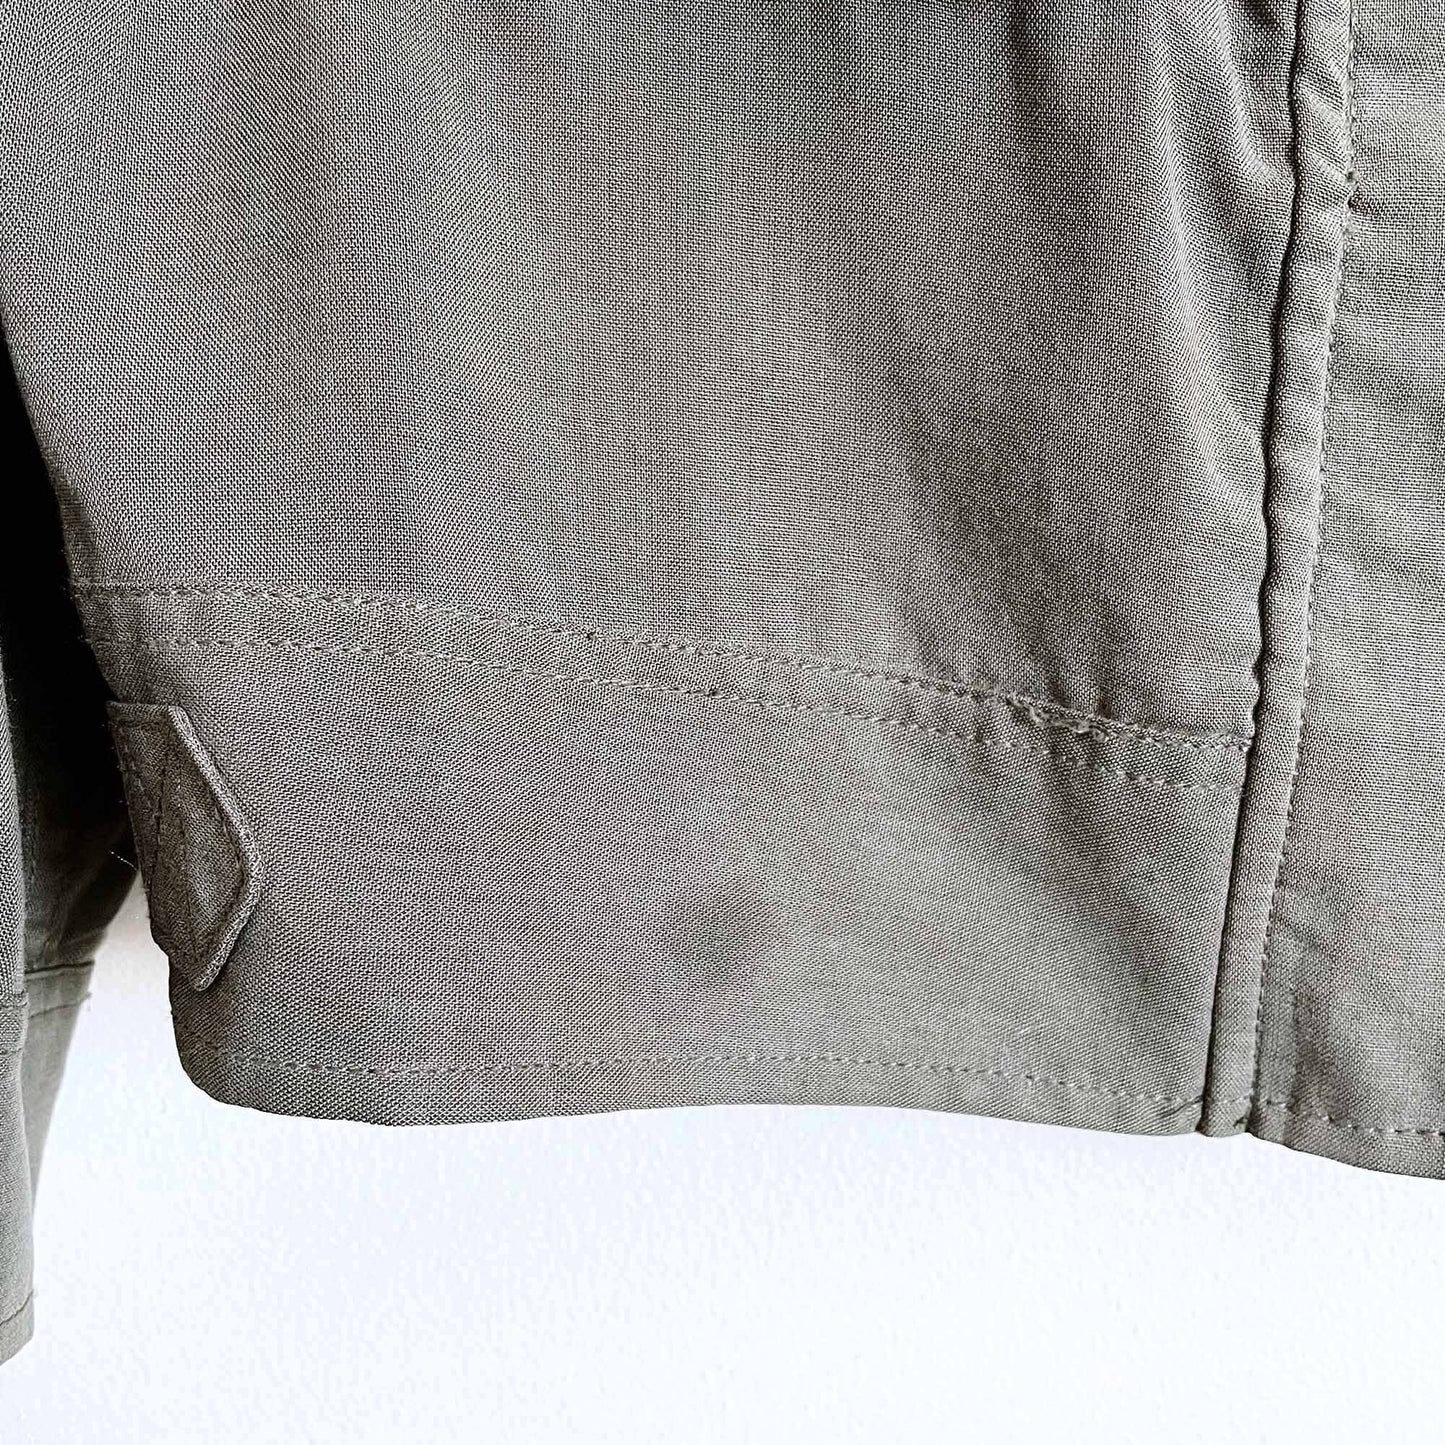 club monaco short khaki utility jacket - size small